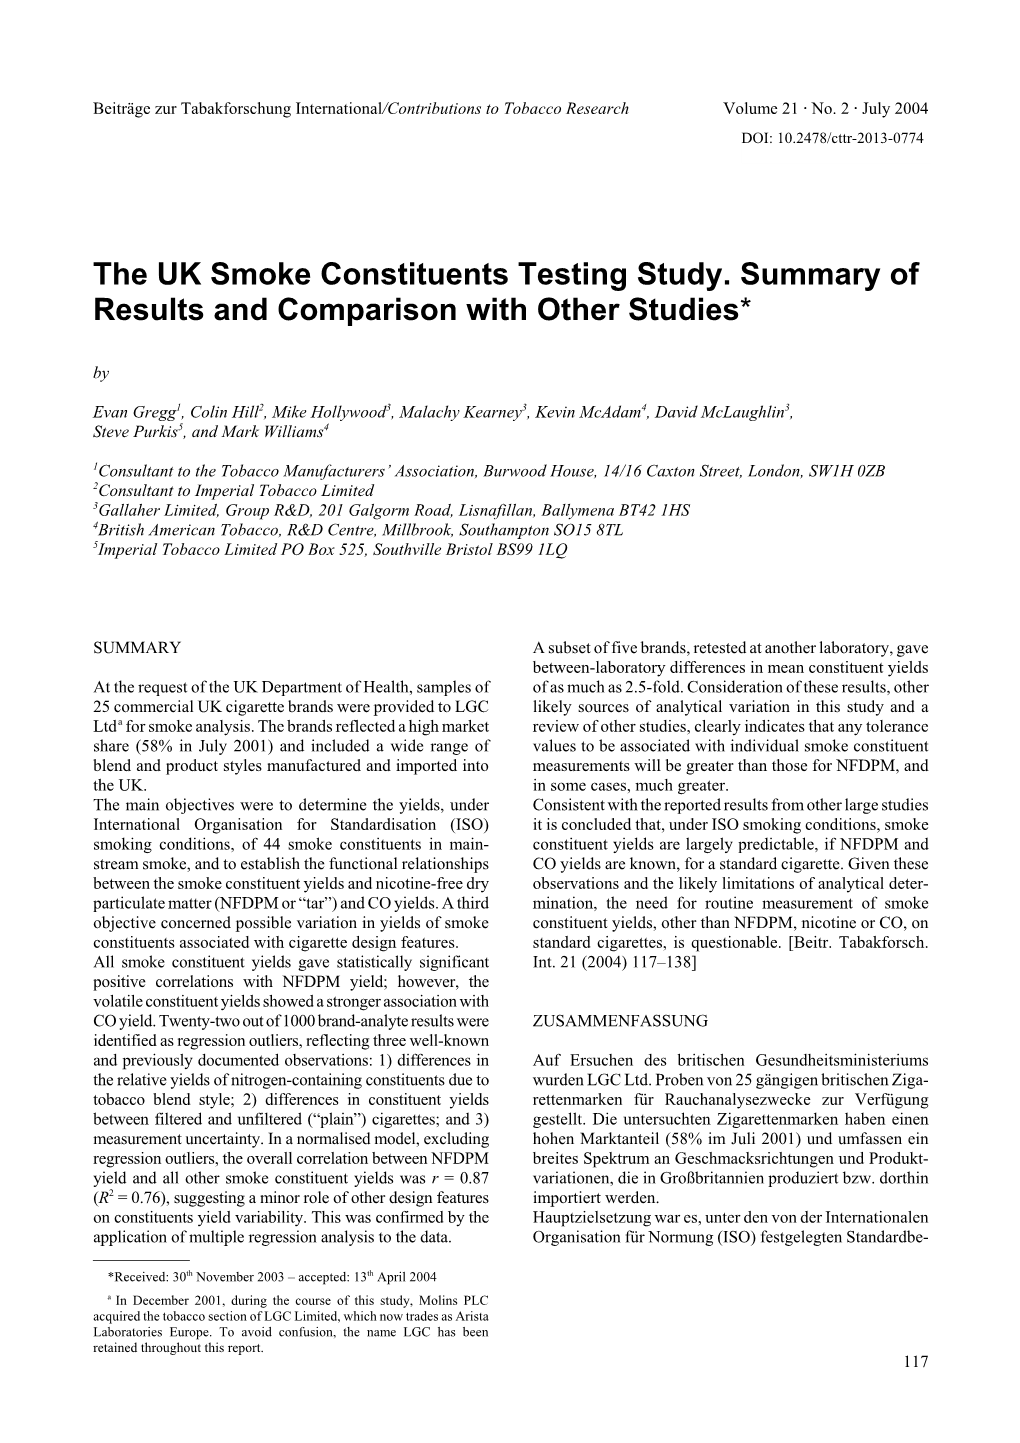 The UK Smoke Constituents Testing Study